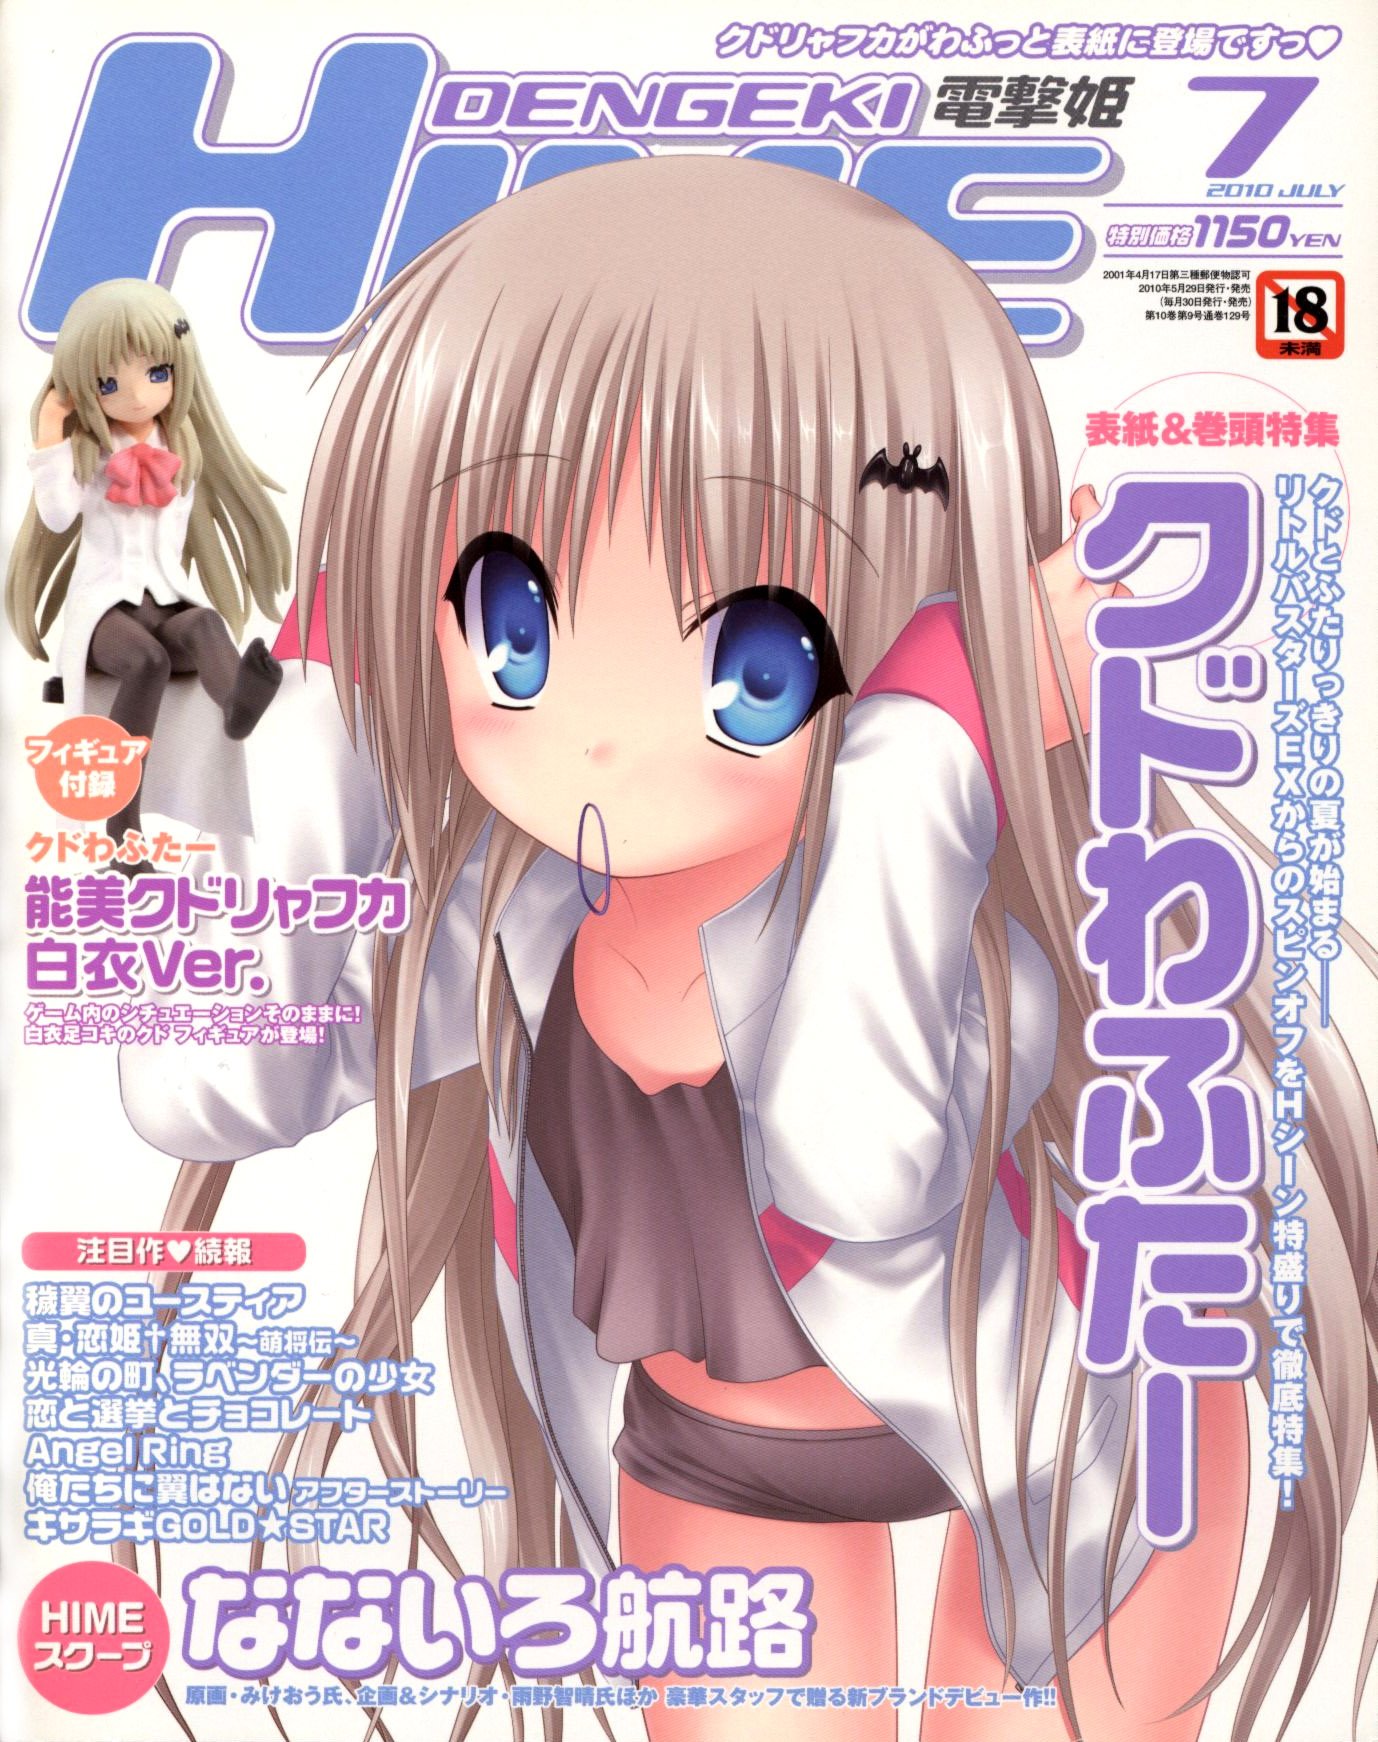 Dengeki Hime Issue 124 (July 2010)